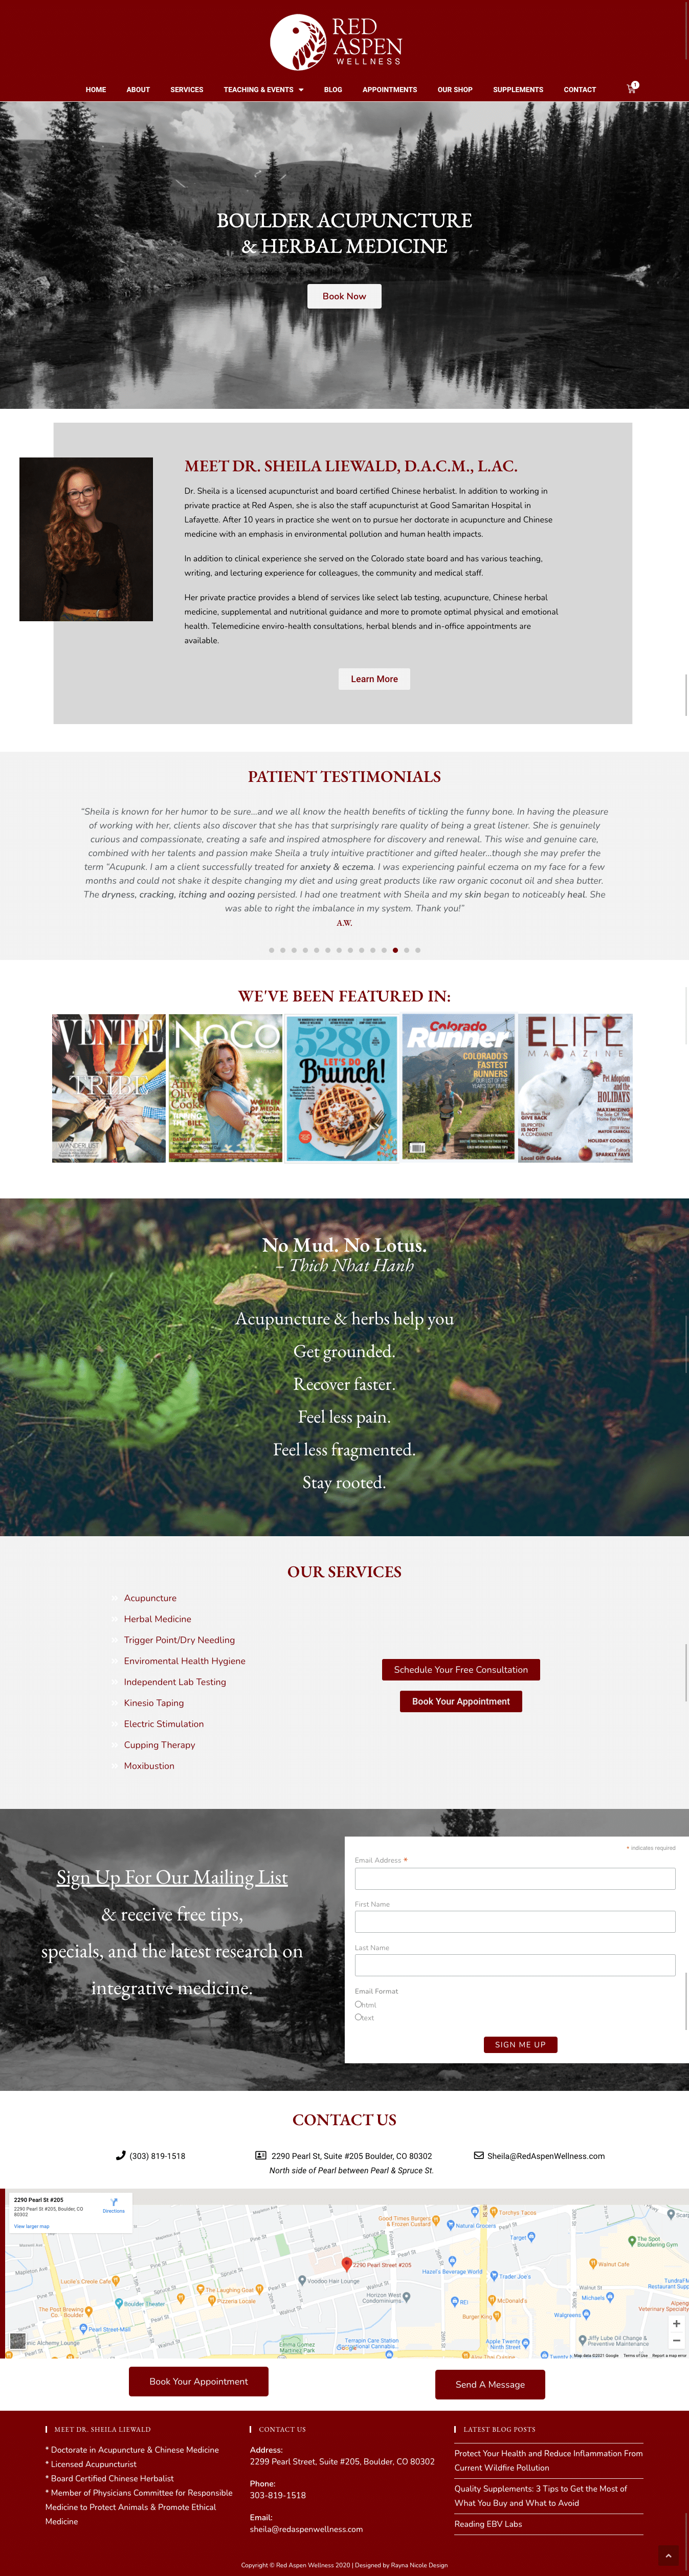 homepage of red aspen wellness